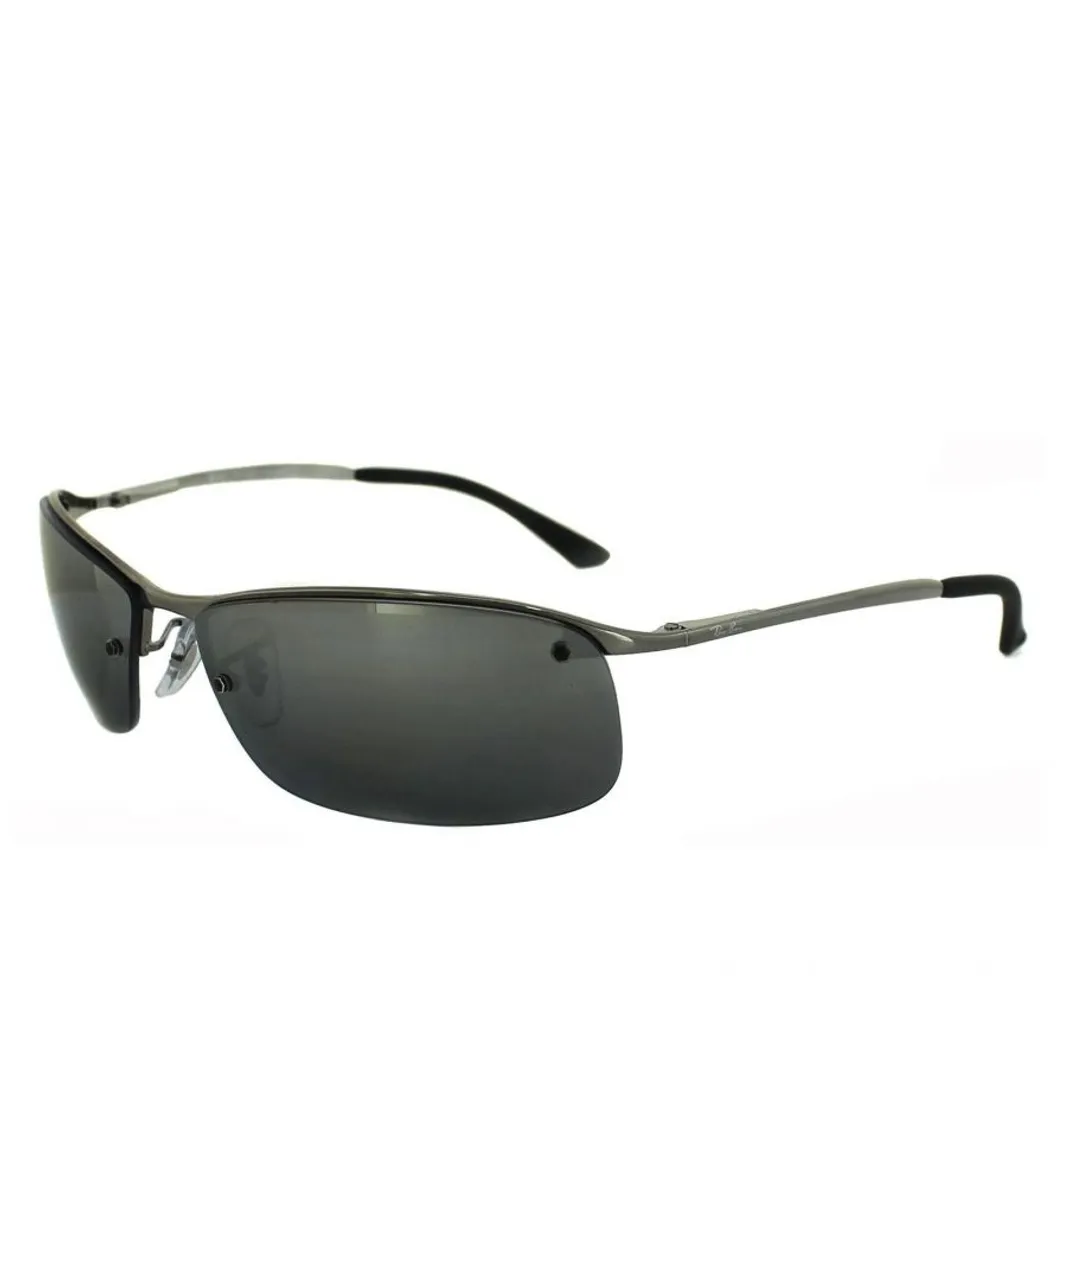 Ray-Ban Mens Sunglasses 3183 004 82 Gunmetal Silver Mirror Polarized - Grey - One